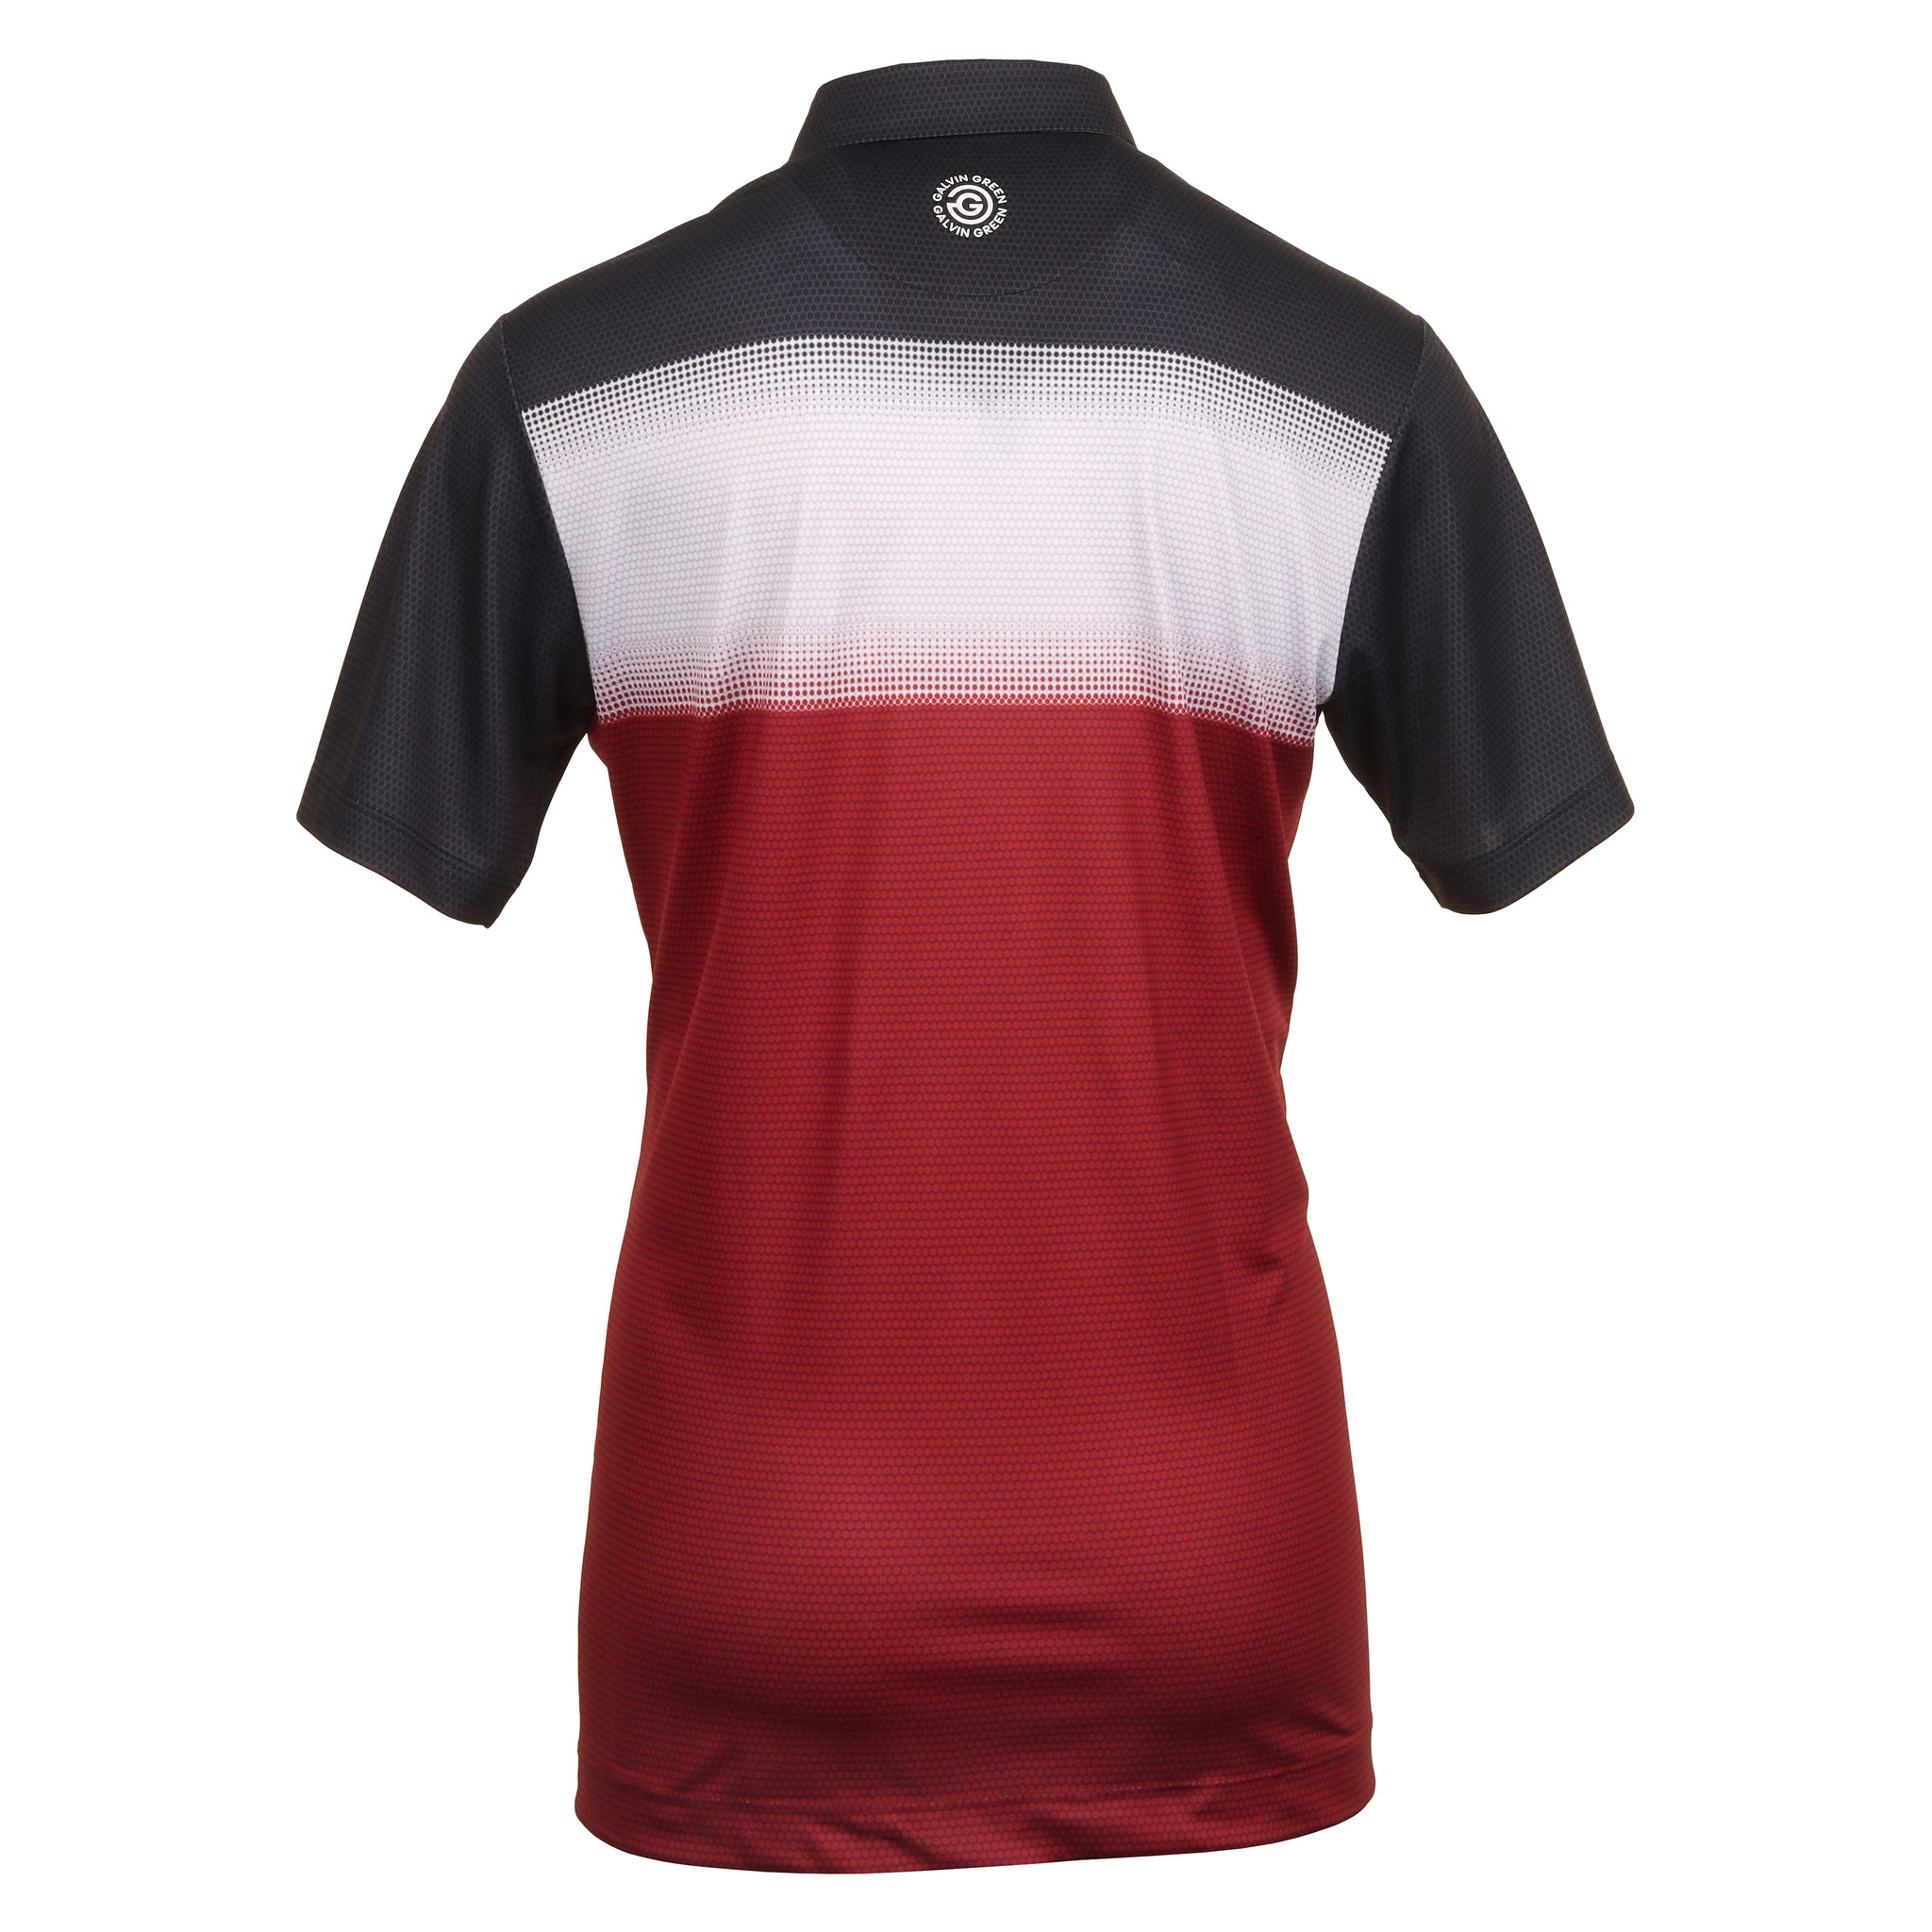 galvin-green-mo-ventil8-golf-shirt-red-white-black-9854